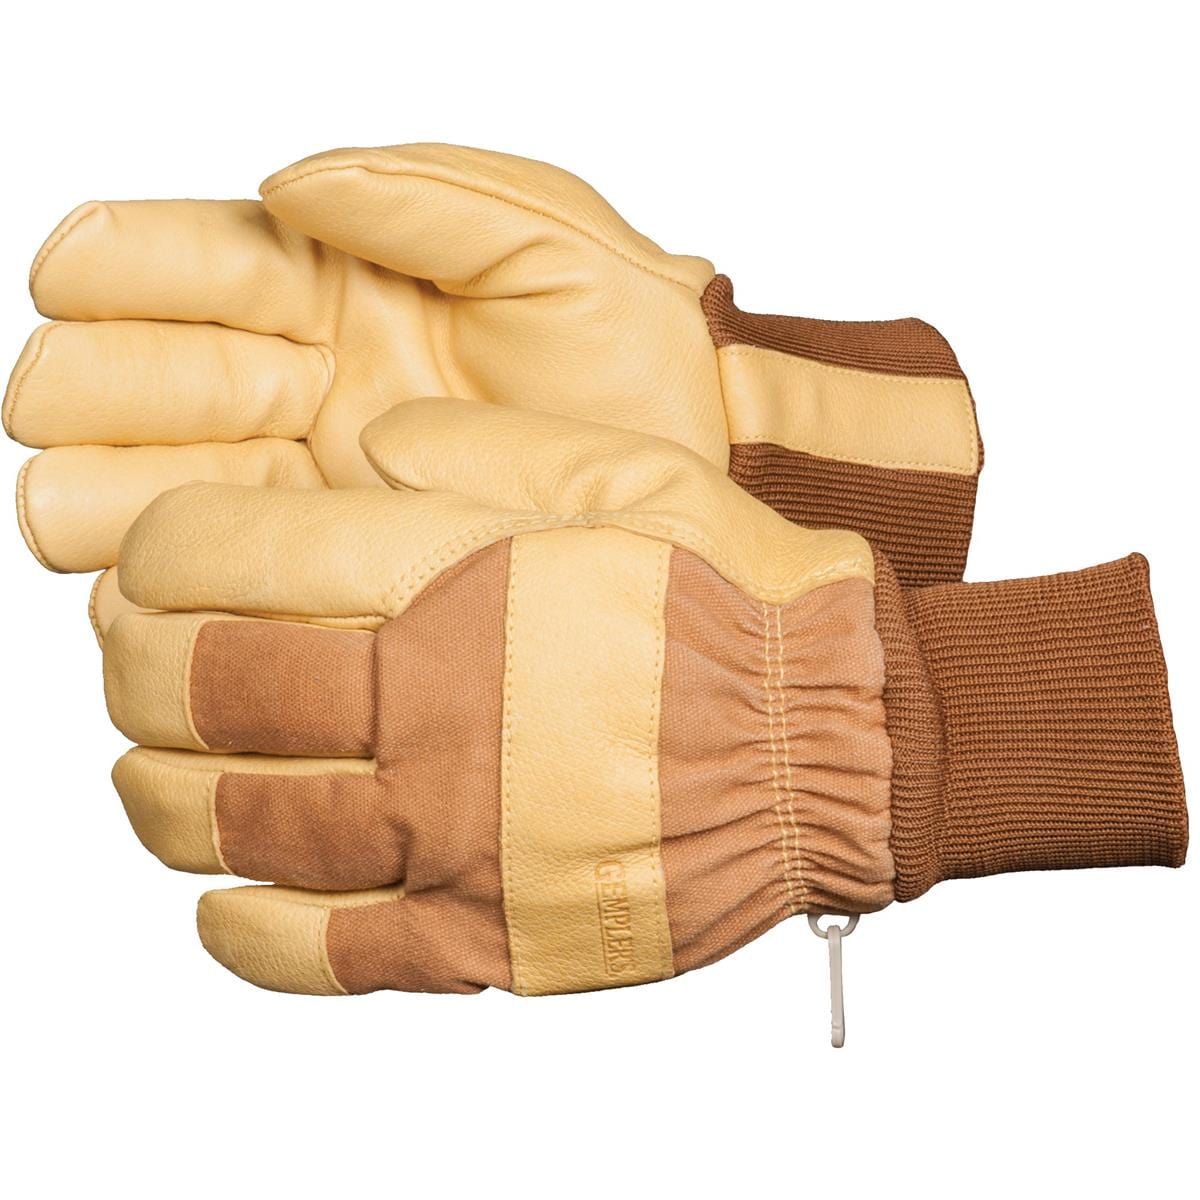 Insulated Waterproof Work Gloves